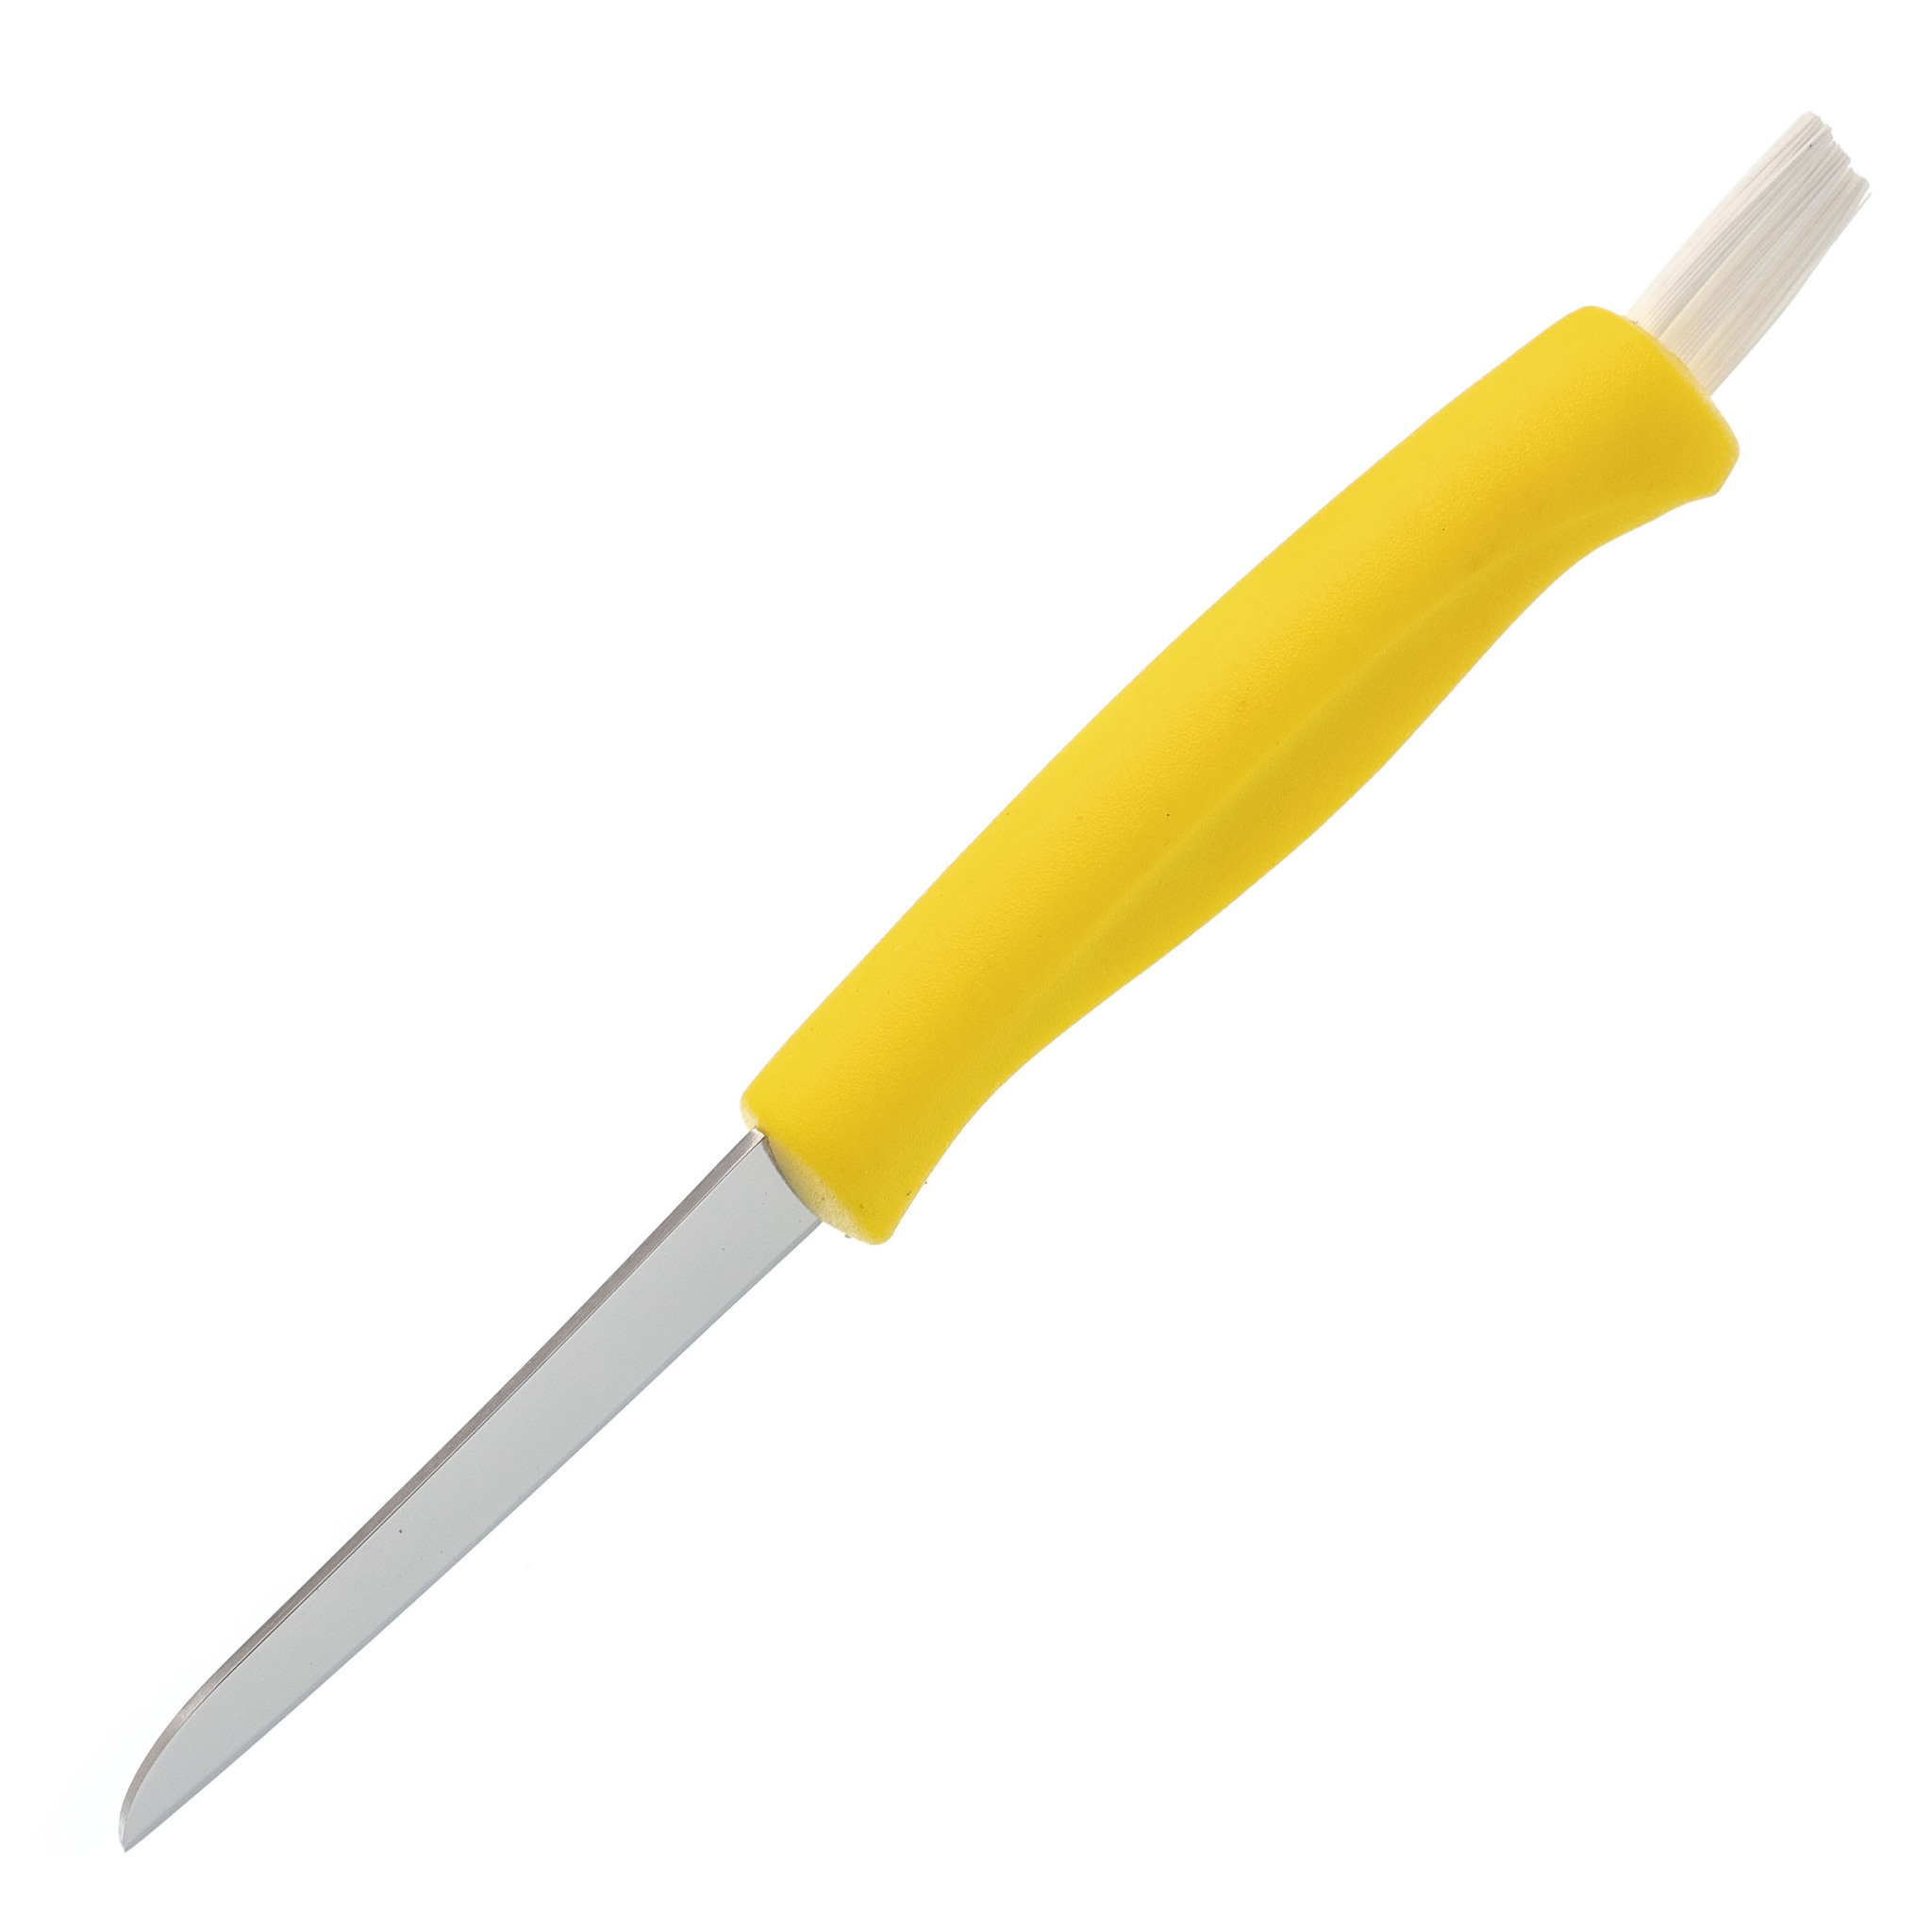 Нож грибной Marttiini Mushroom knive, сталь X46Cr13, рукоять пластик от Ножиков